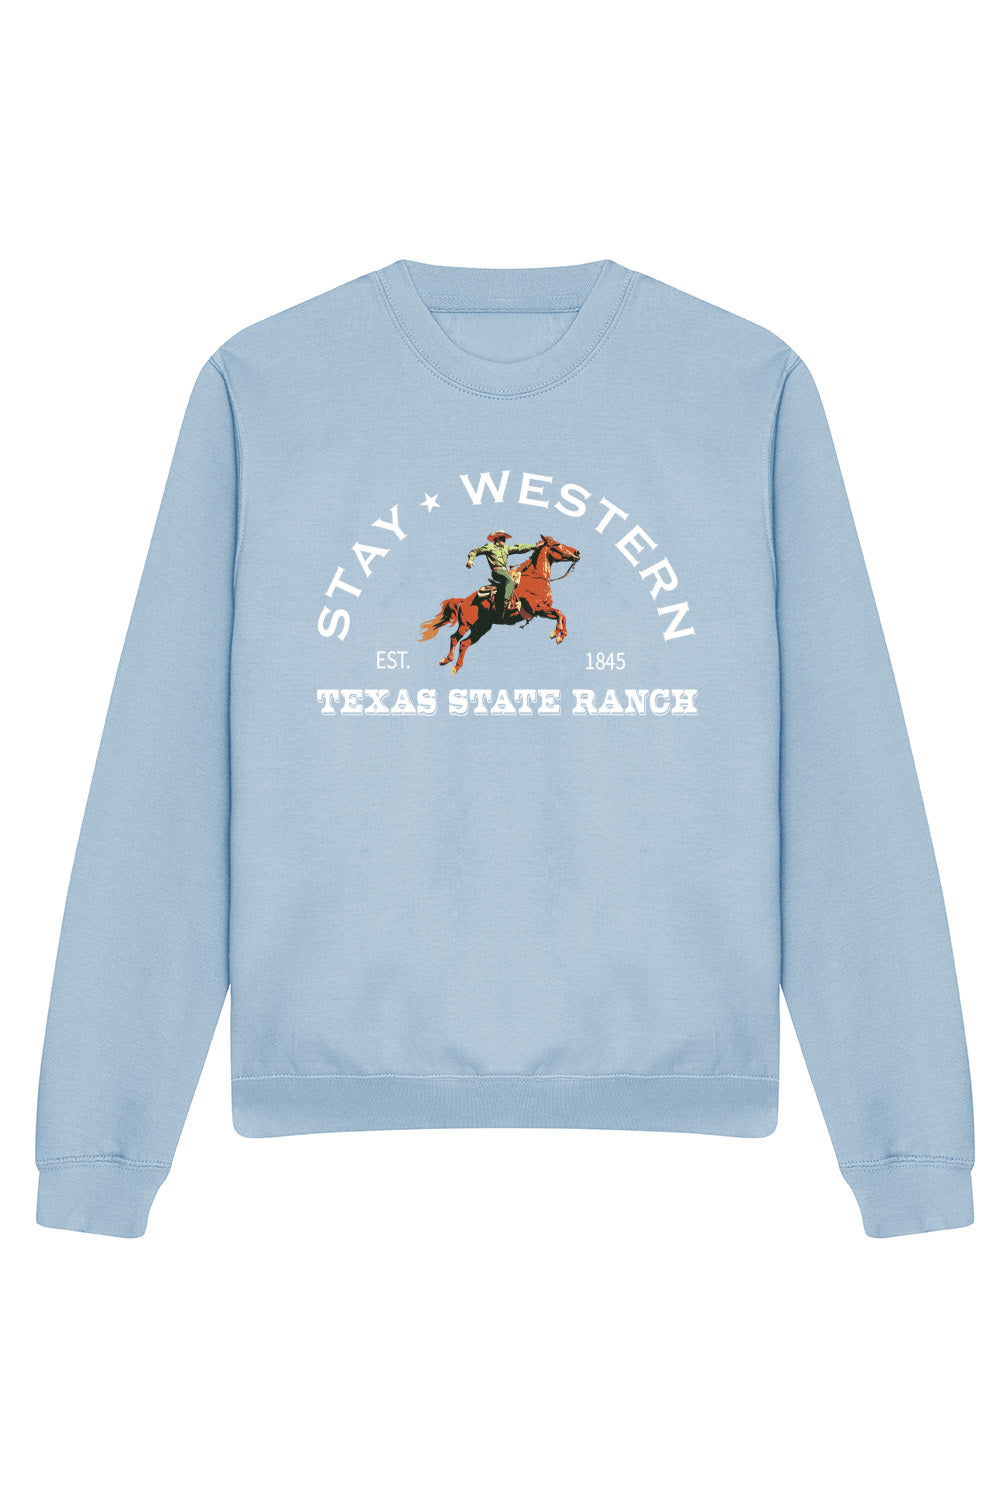 Stay Western Sweatshirt In Sky Blue (Custom Pack)